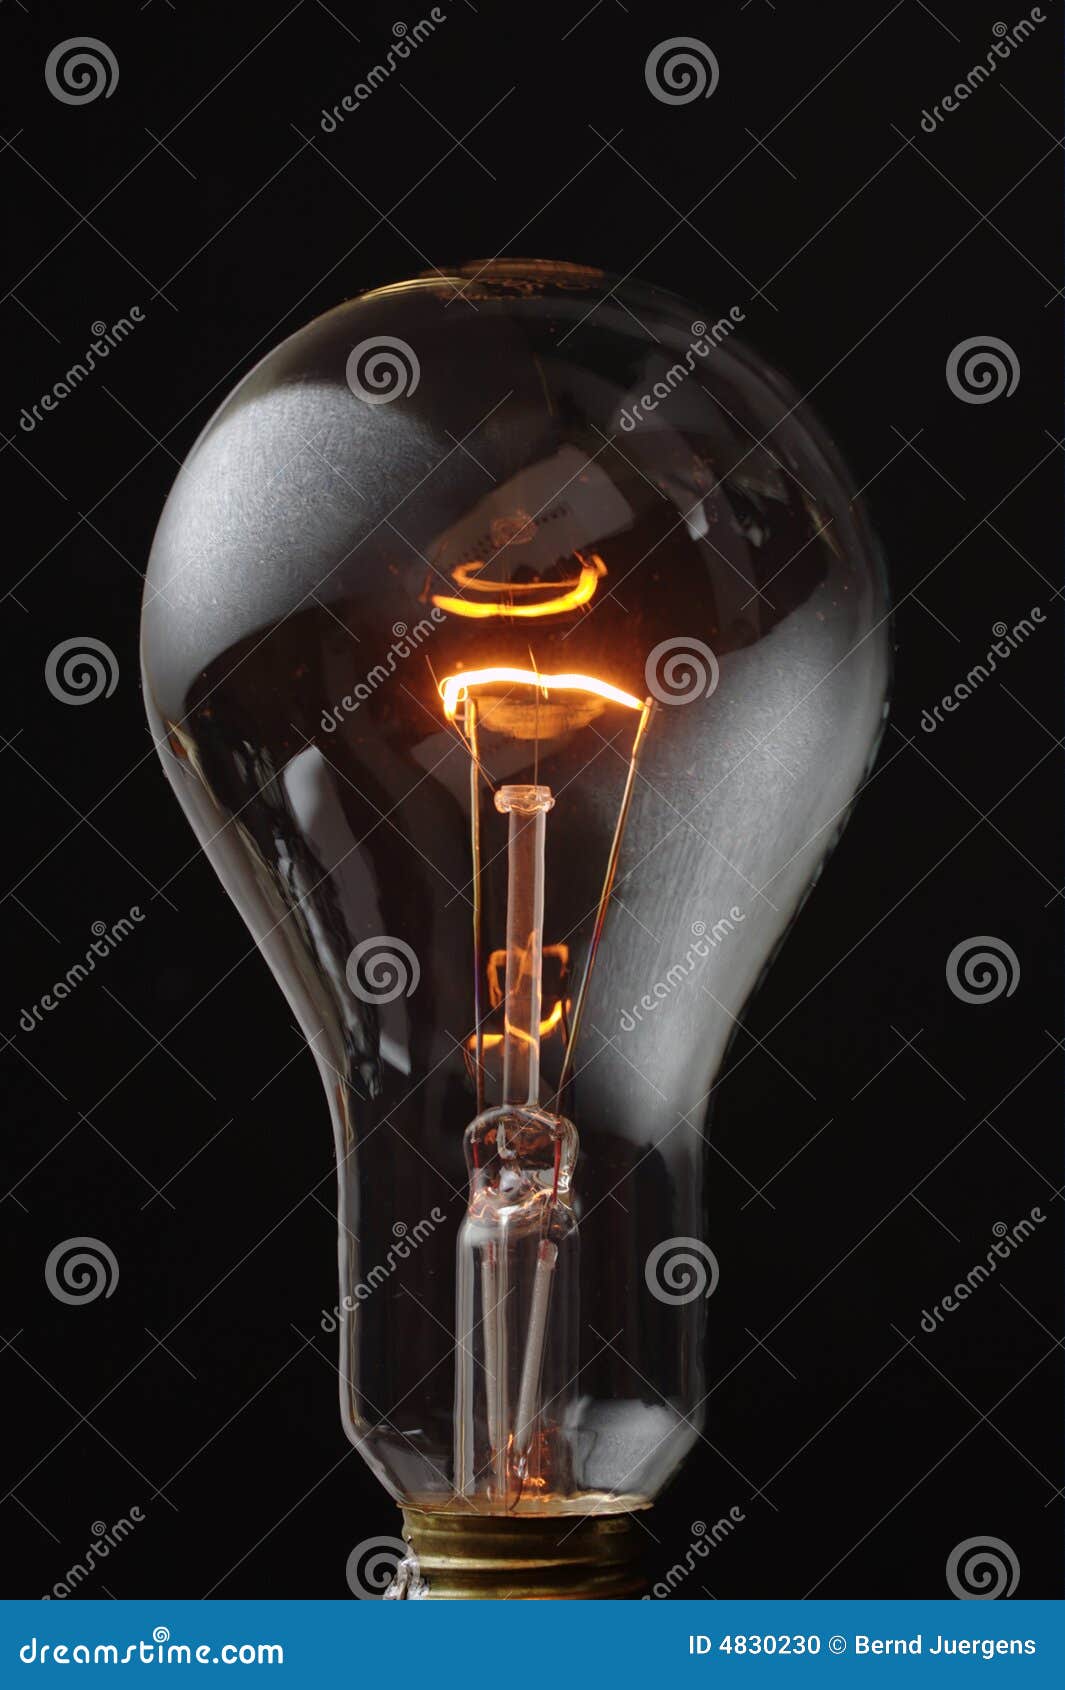 dim light bulb